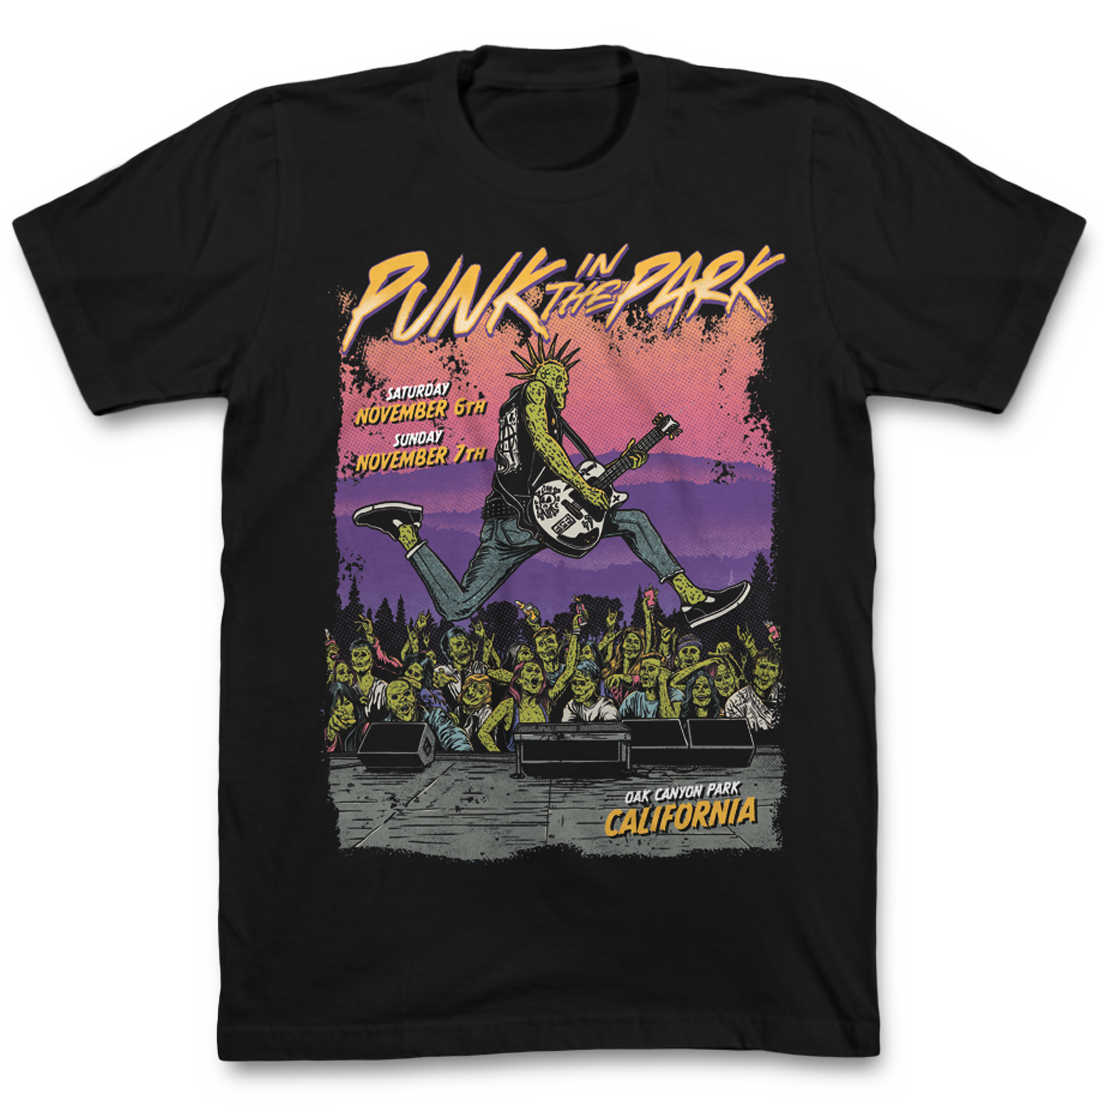 Punk In The Park - OC 21 - Short Sleeve Shirt (A)